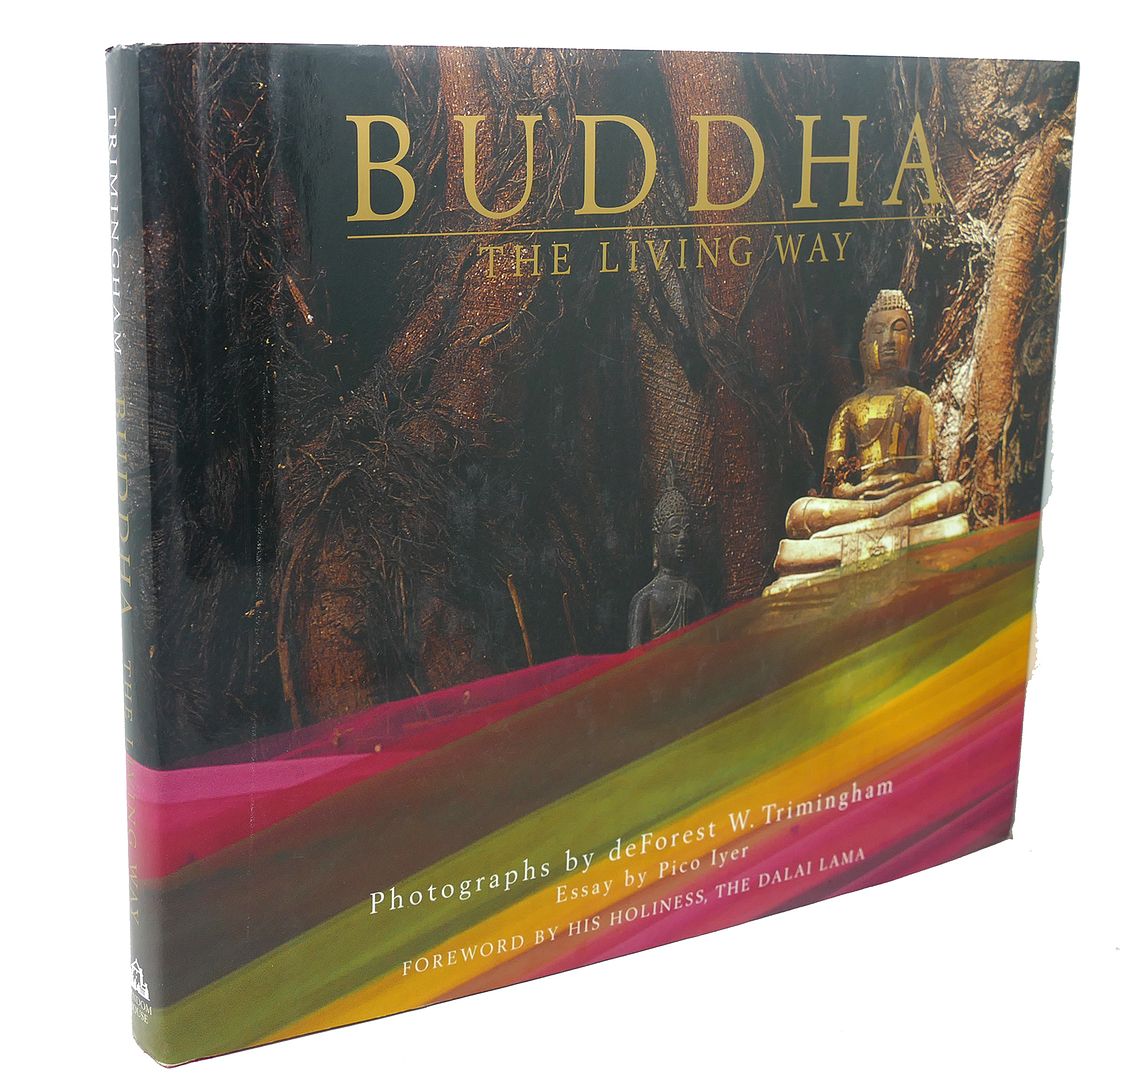 PICO IYER, DEFOREST W. TRIMINGHAM, THE DALAI LAMA - Buddha : The Living Way